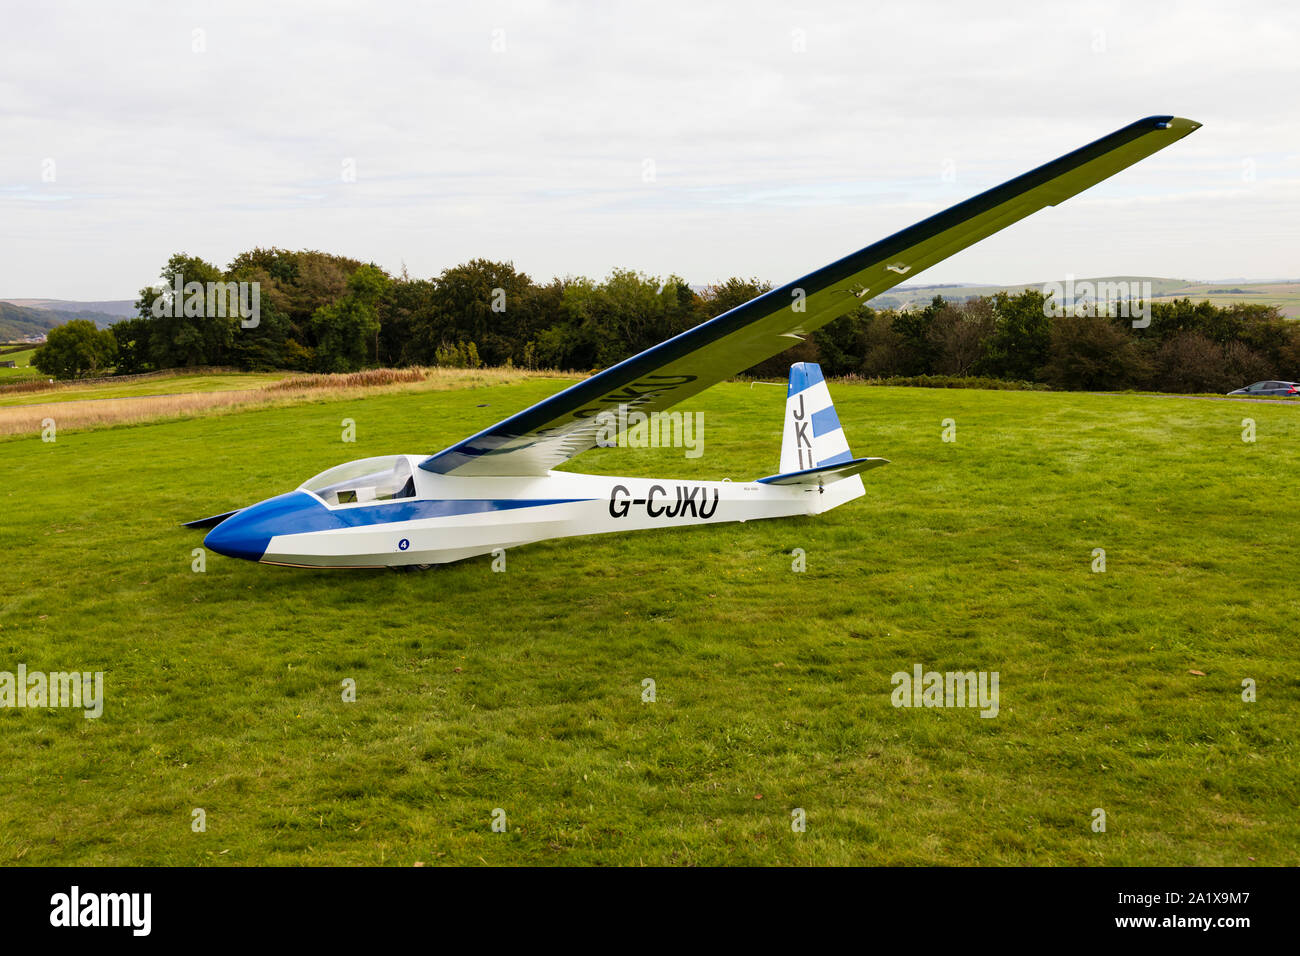 ASK 18 glider at Camphill gliding site, Derbyshire, England Stock Photo